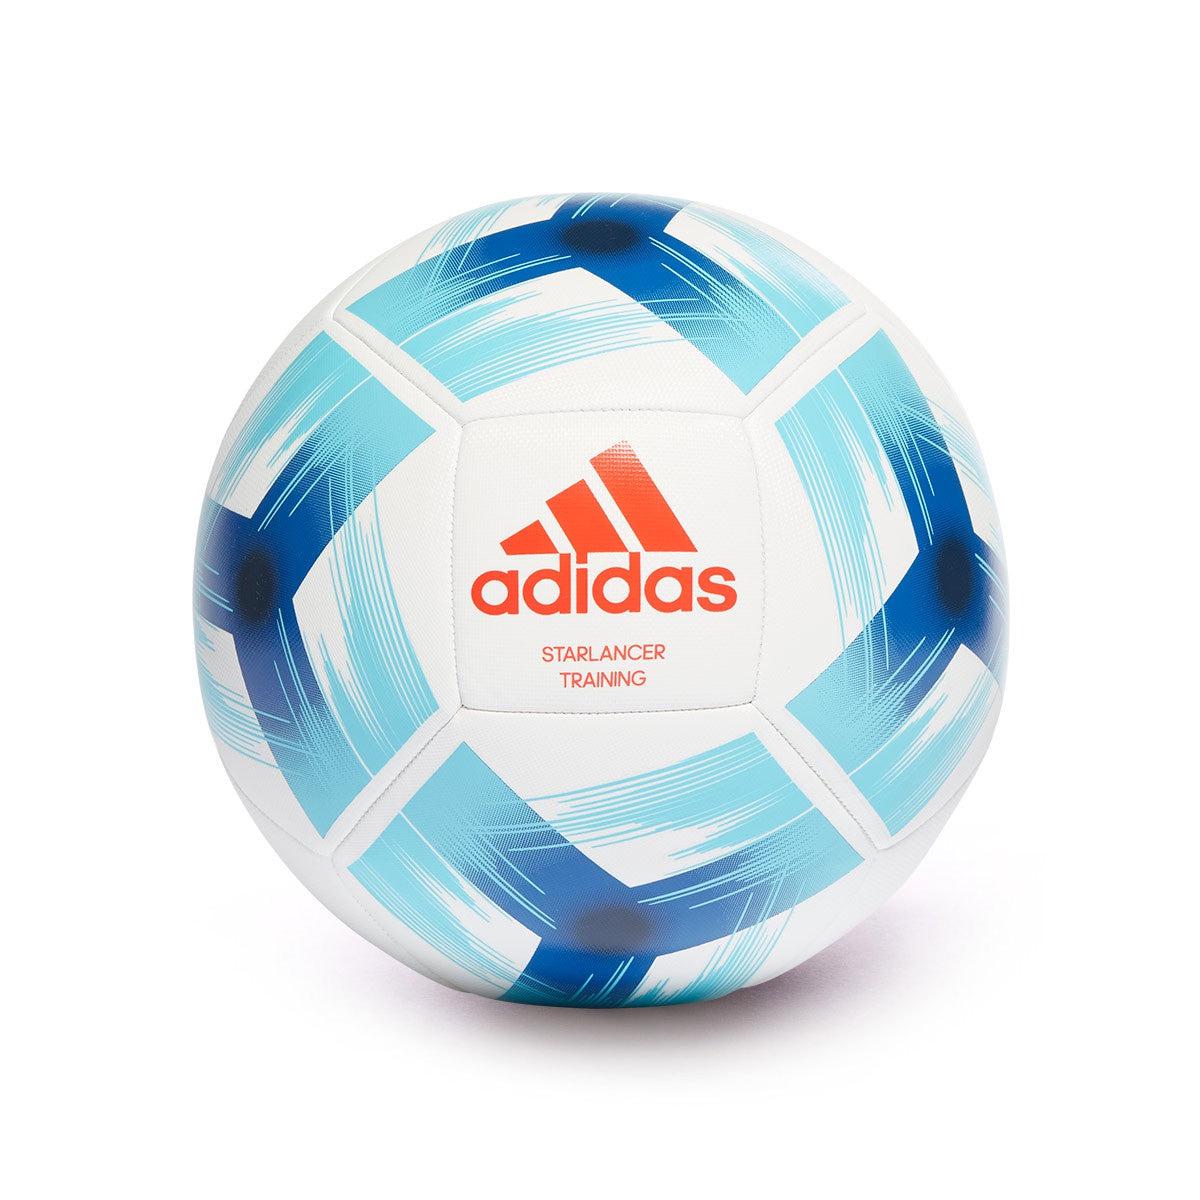 Adidas Starlancer Training Football - White/Blue-Bruntsfield Sports Online